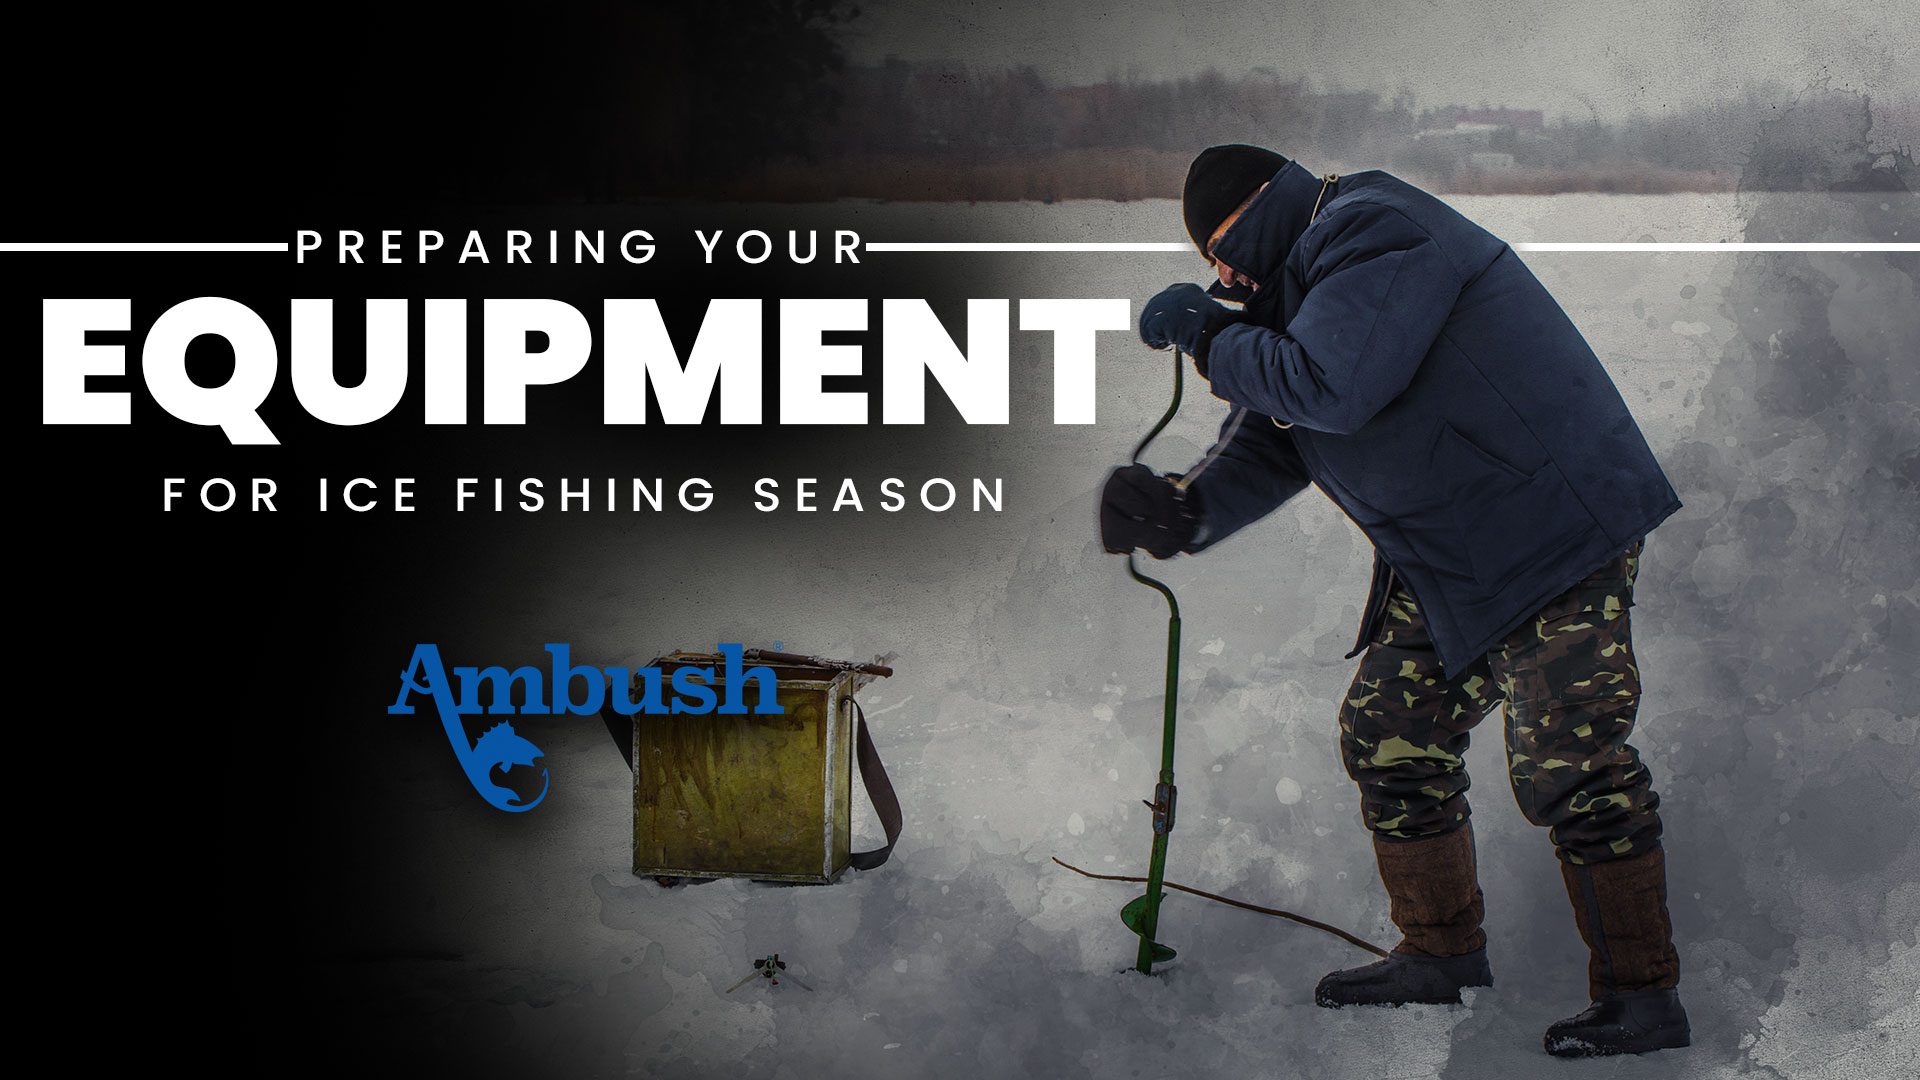 Prepare your Equipment for Ice Fishing Season